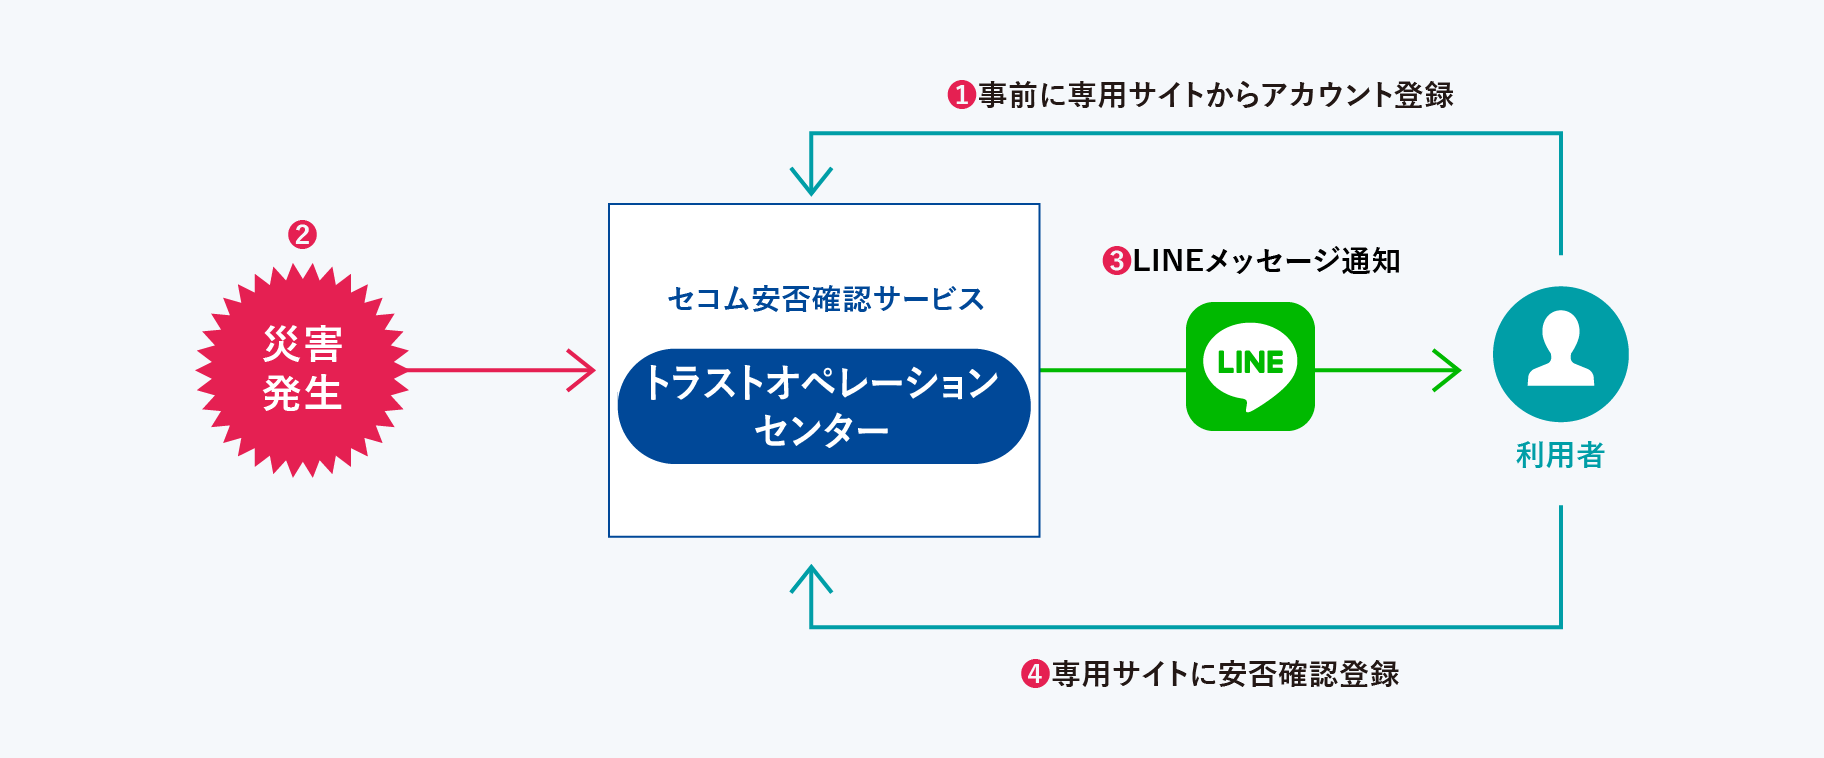 LINEアプリを使った安否報告のイメージ